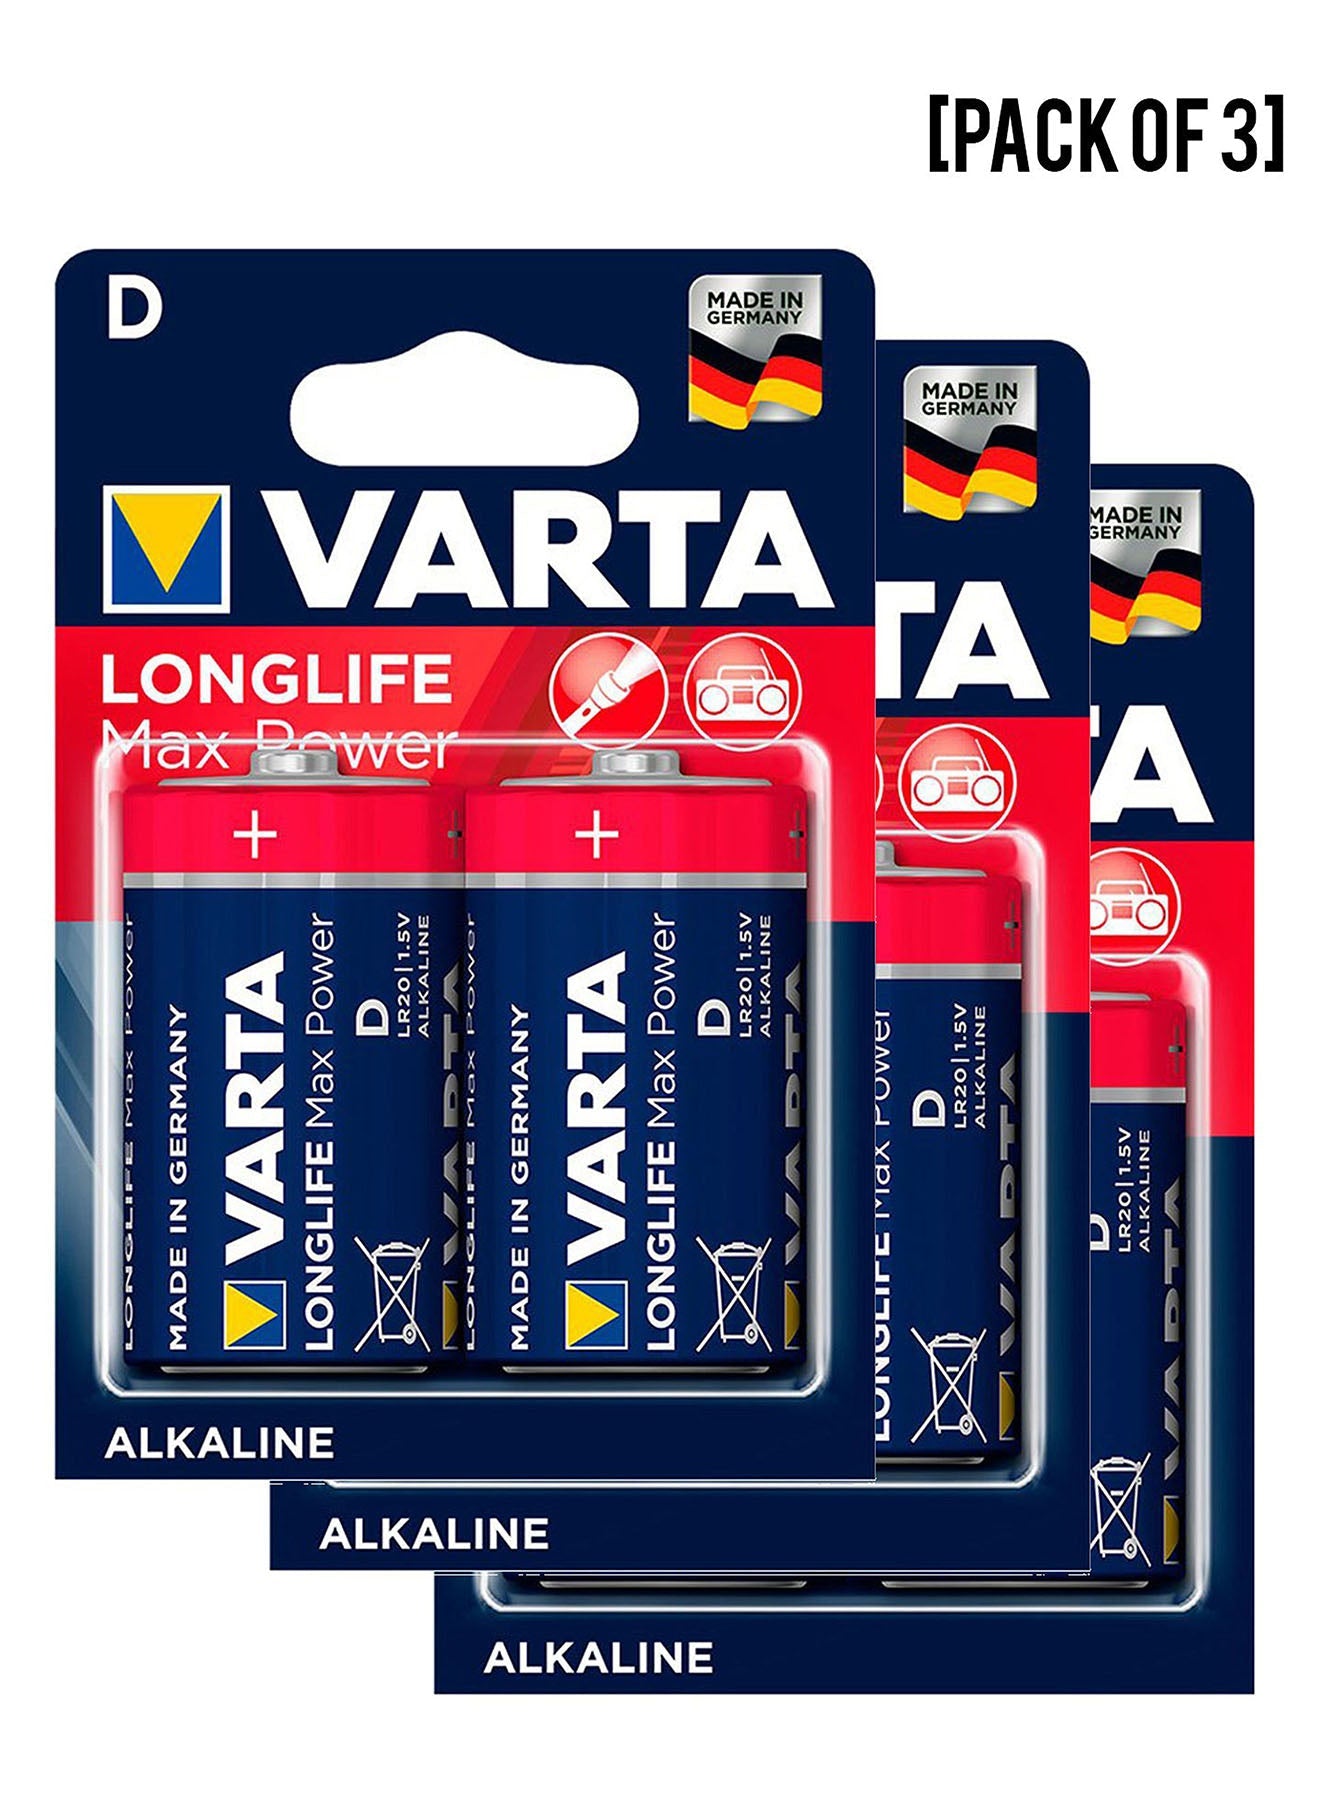 Varta Long Life Max Power LR20 D Alkaline Battery 2 Units Value Pack of 3 